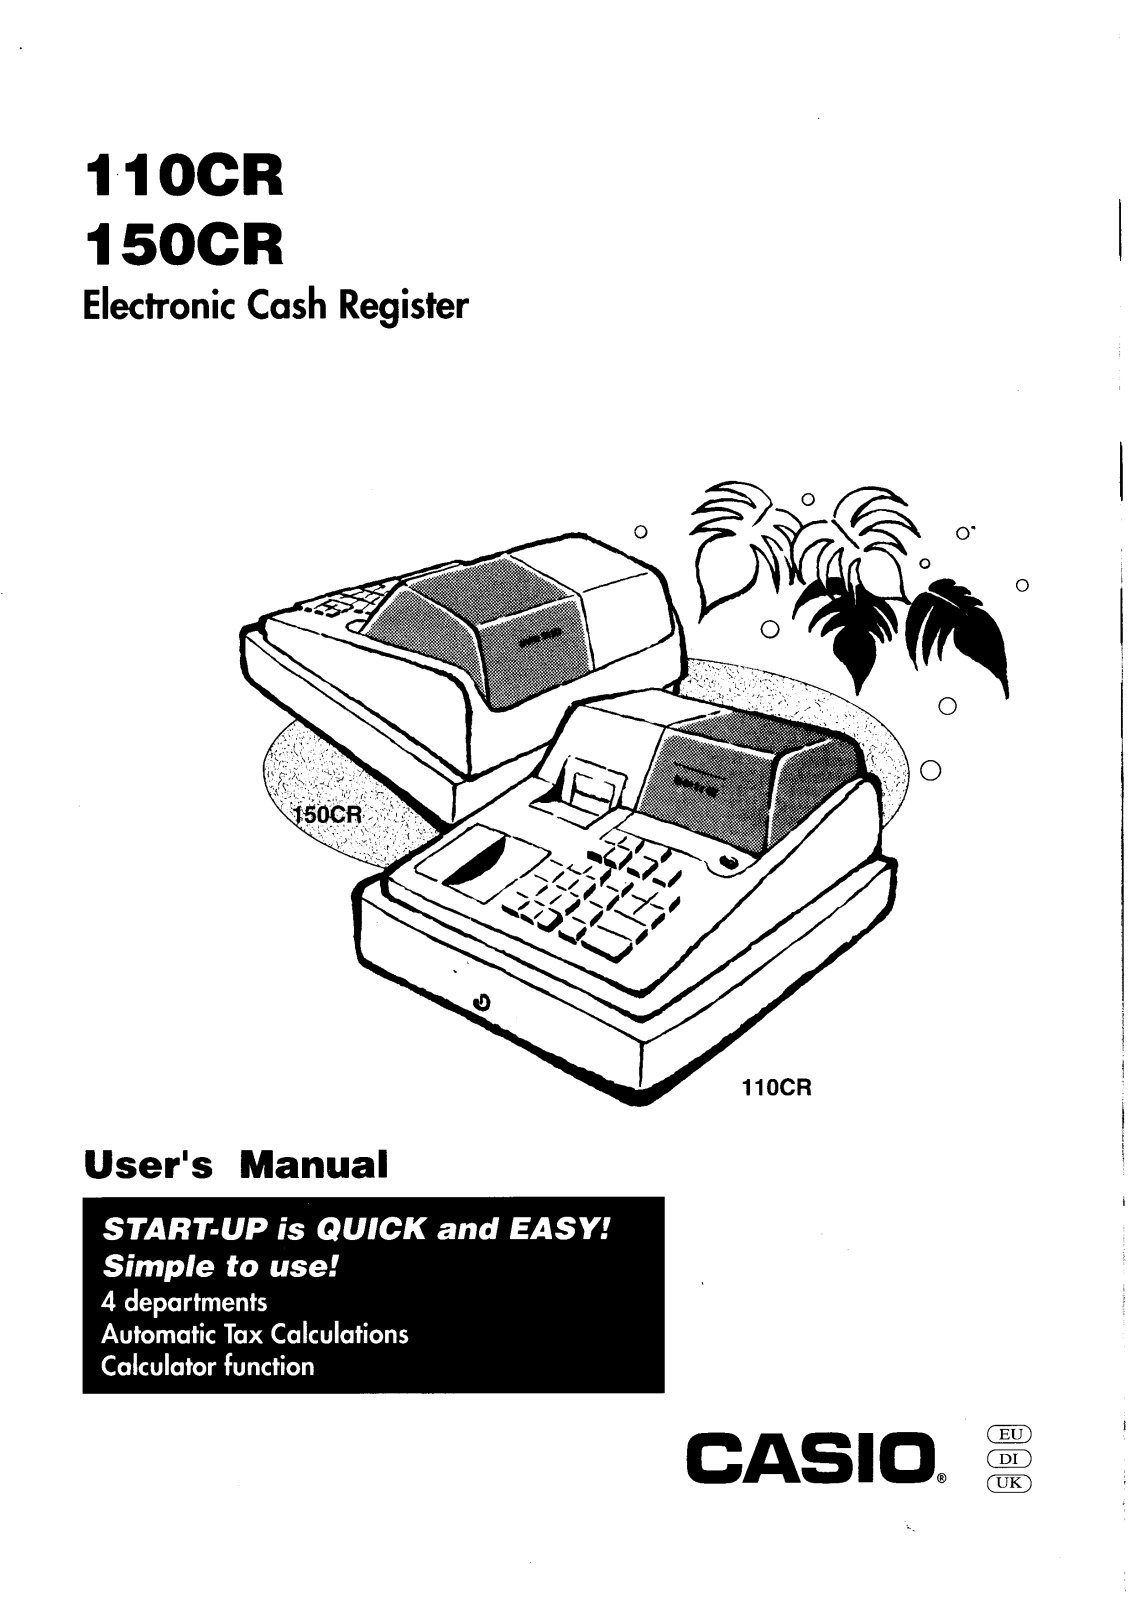 CASIO 110CR, 150CR User Manual